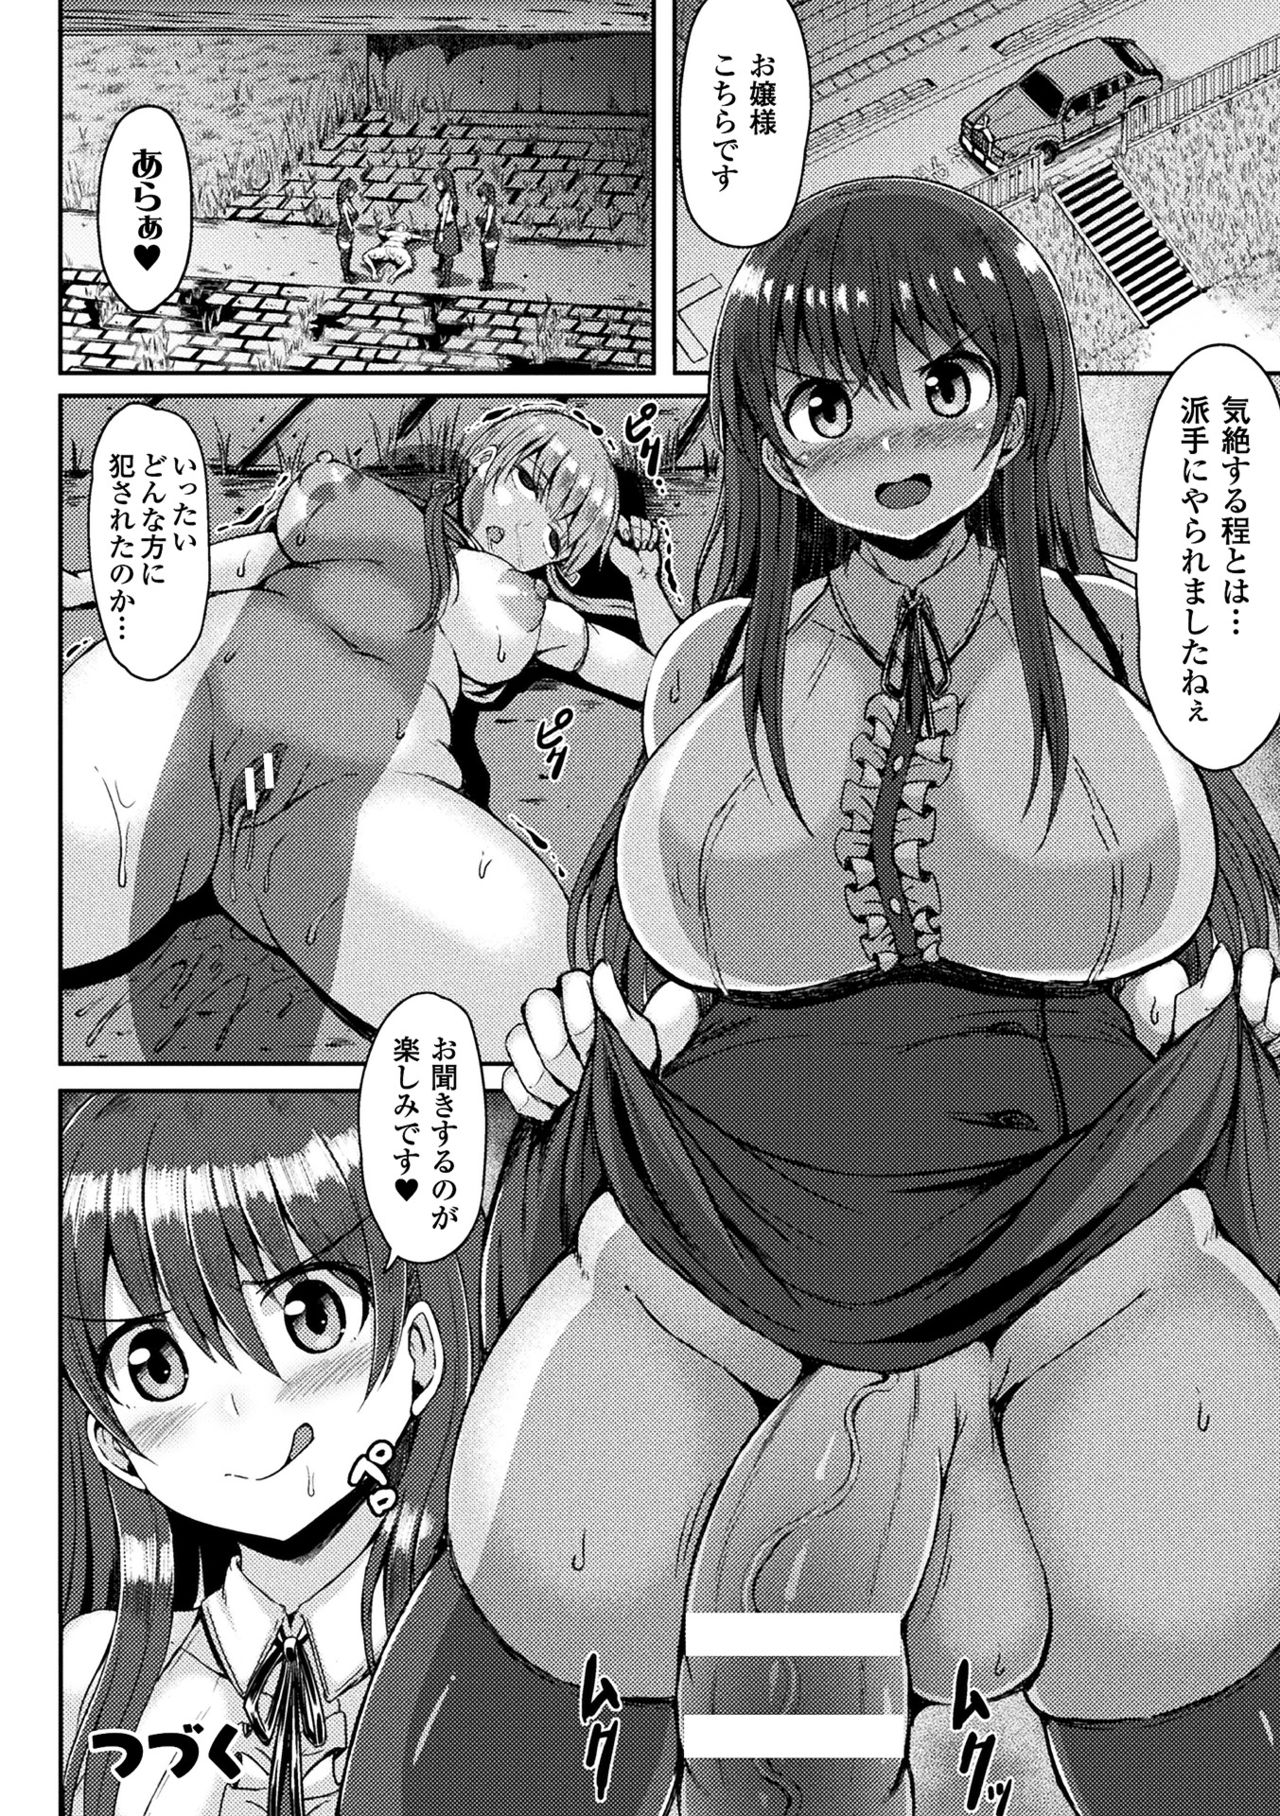 Read Teterun MuchiMuchi Dobyuu Digital Hentai Porns Manga And Porncomics Xxx